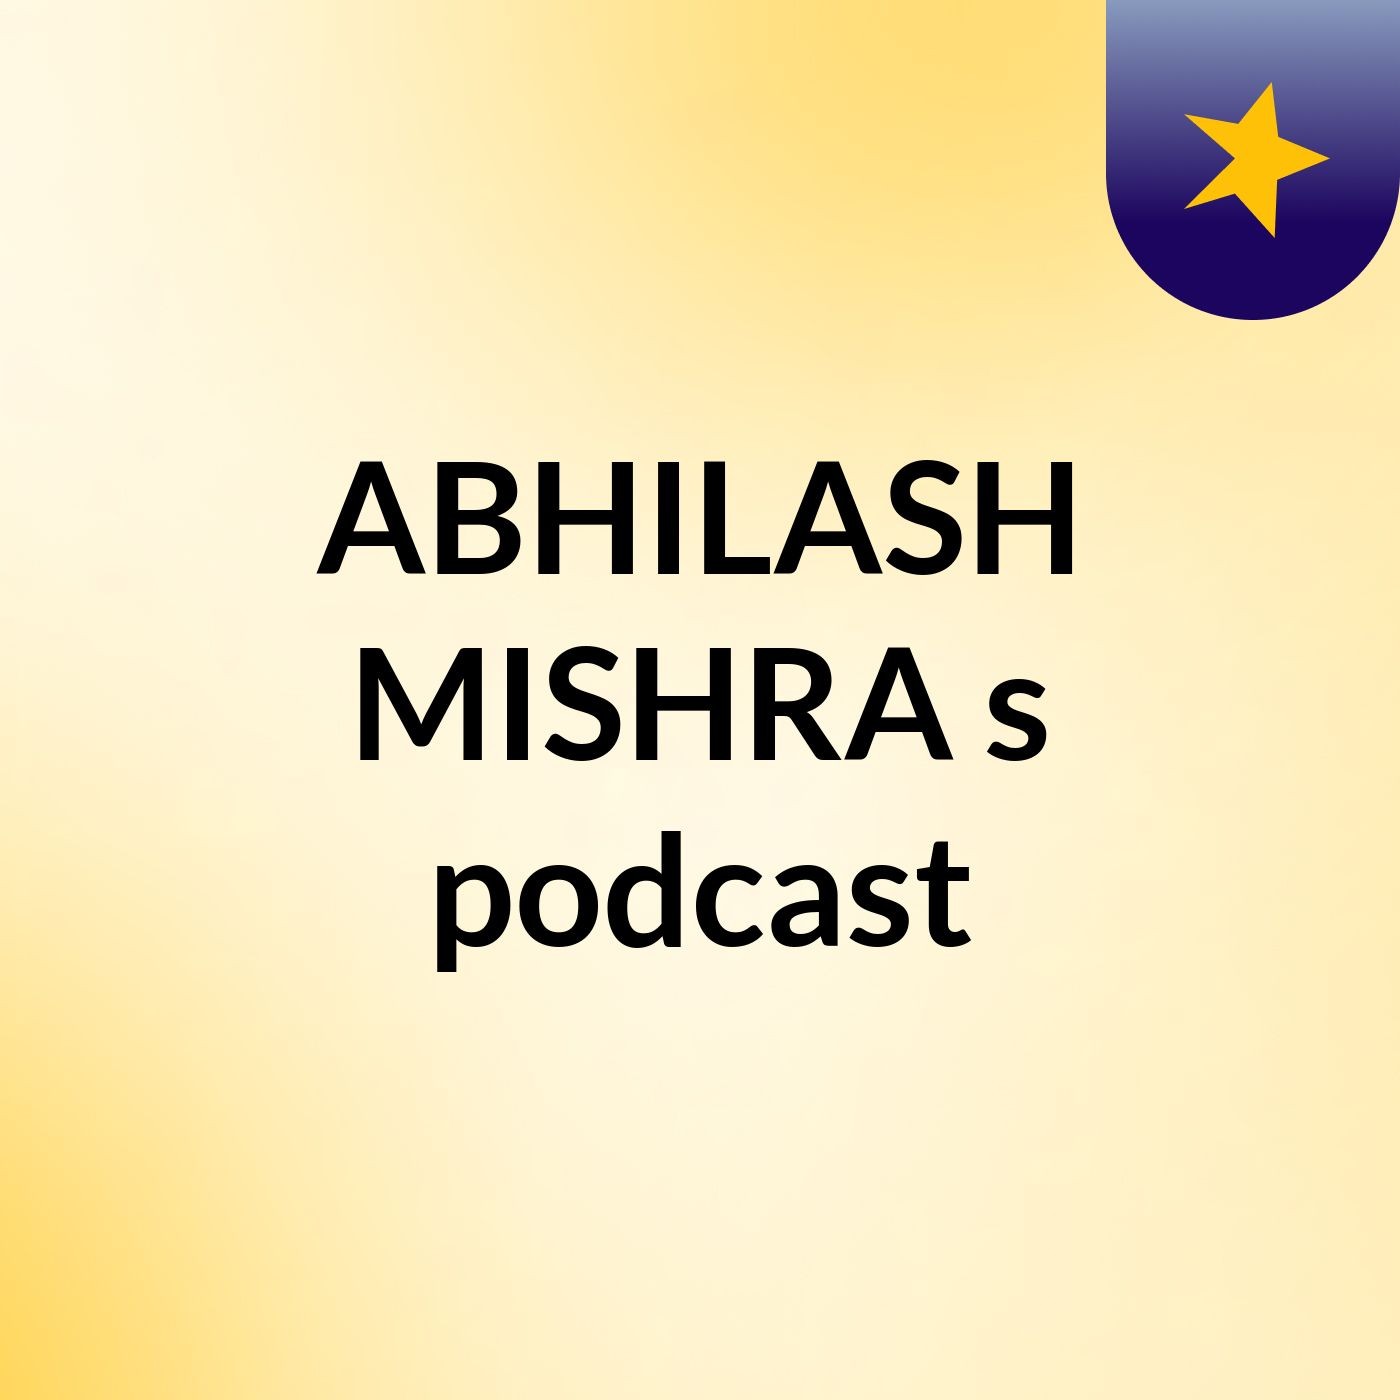 ABHILASH MISHRA's podcast